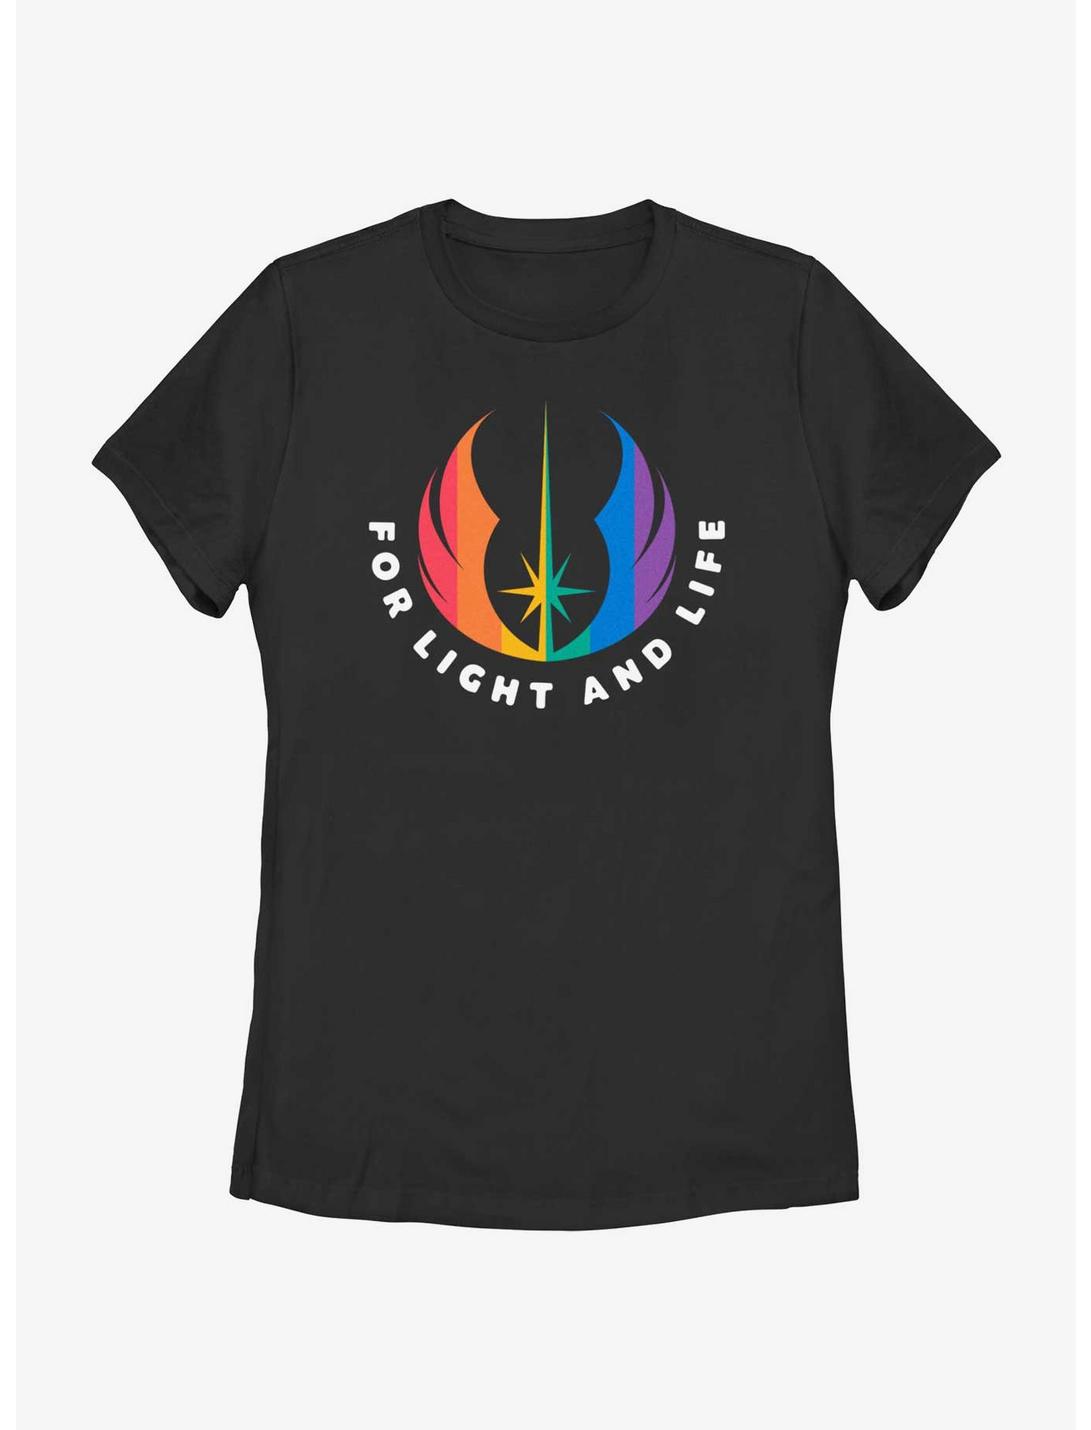 Star Wars For Light And Life Pride T-Shirt, BLACK, hi-res